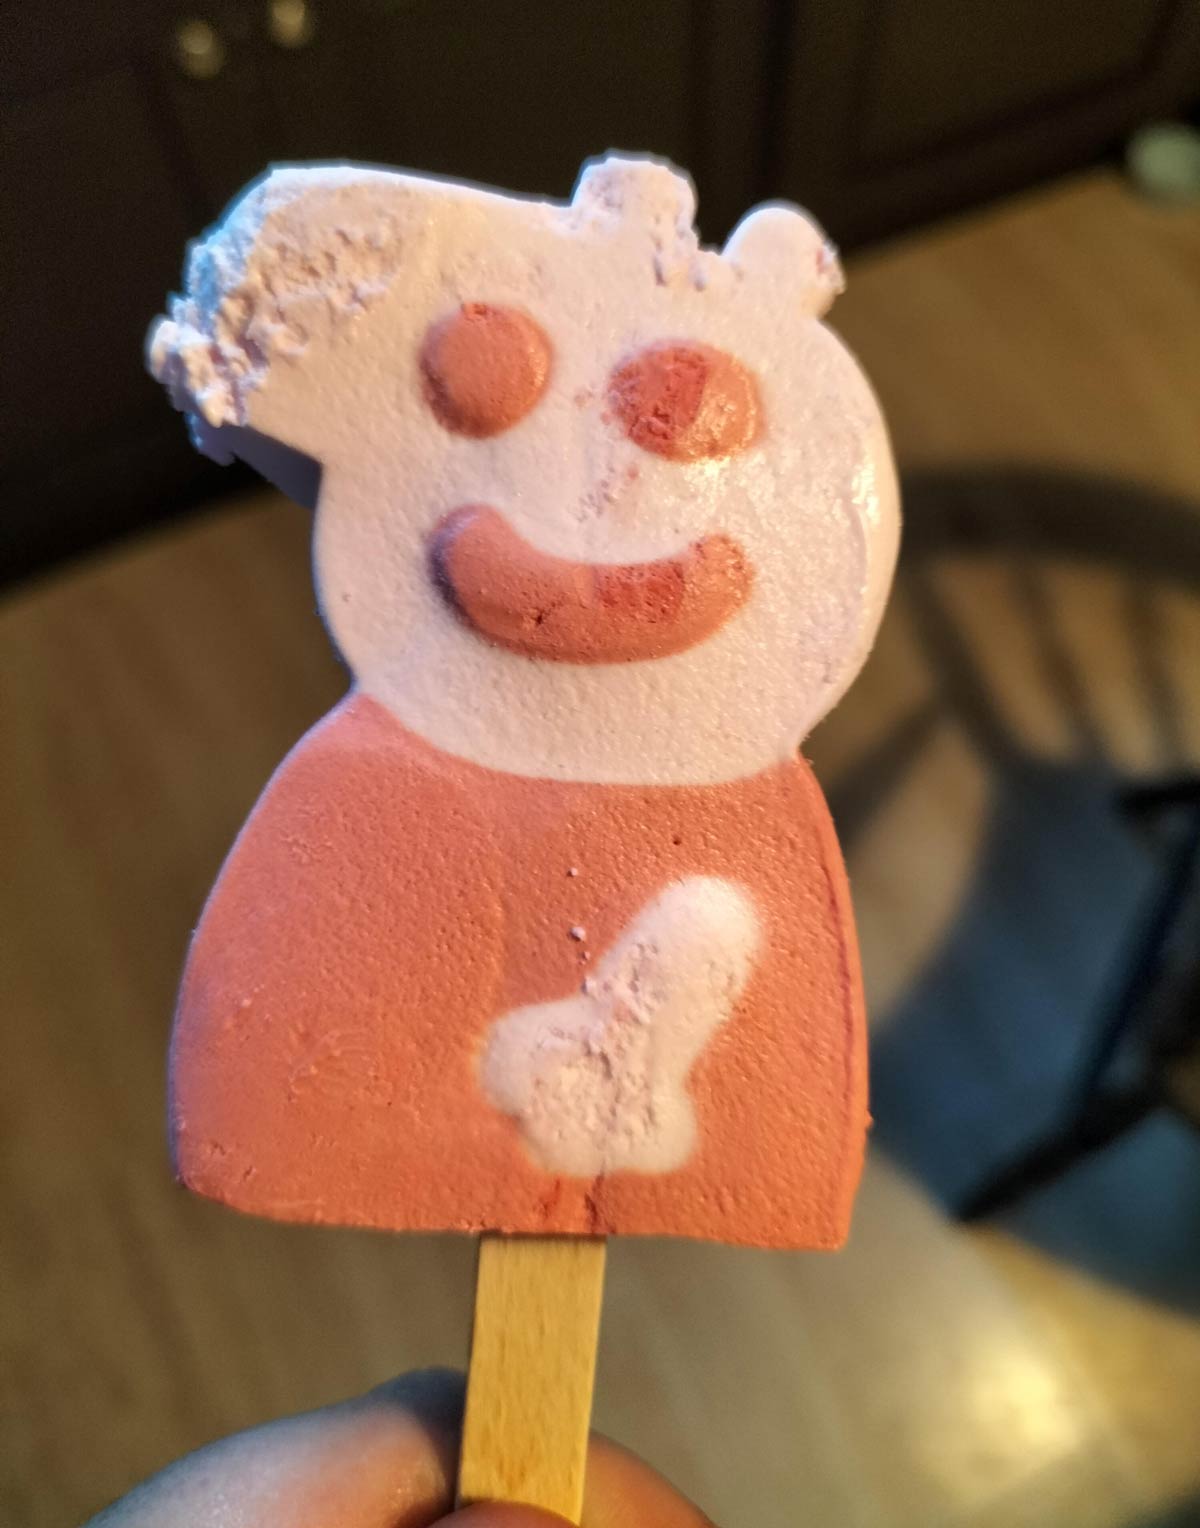 Peppa Pig ice-cream looks like it's happy to see me